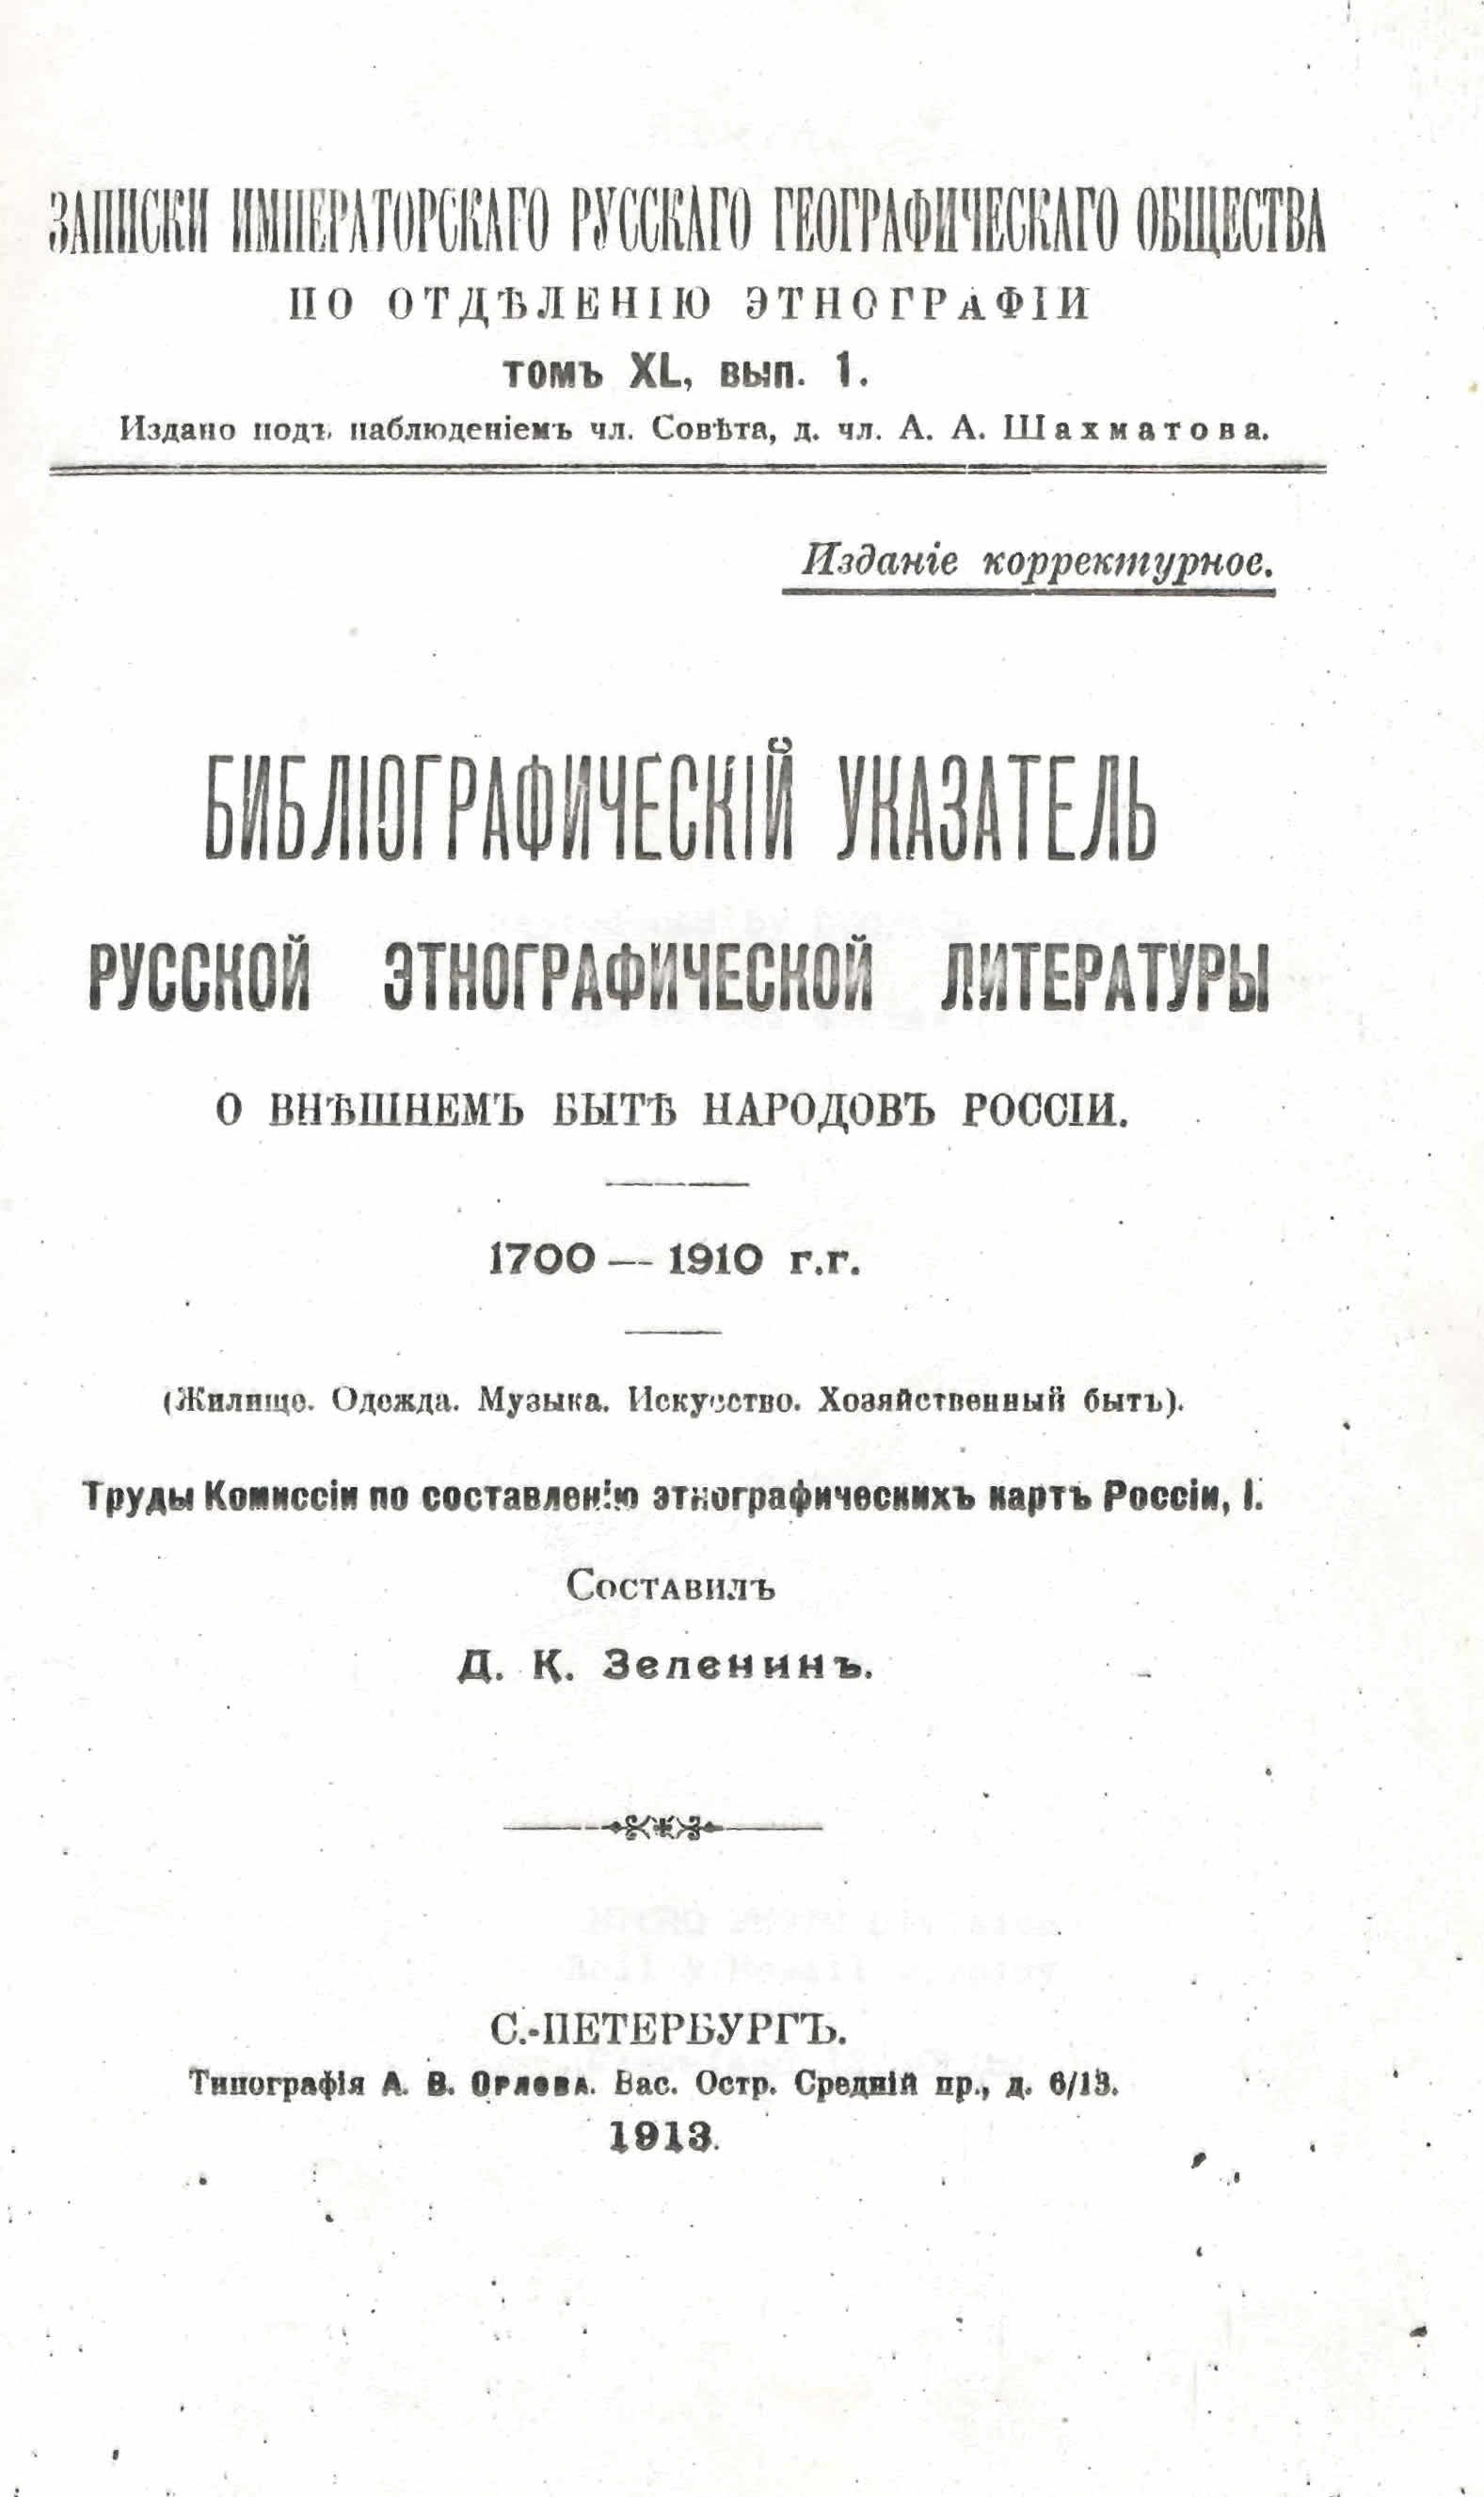 Zelenin Bibliography title page